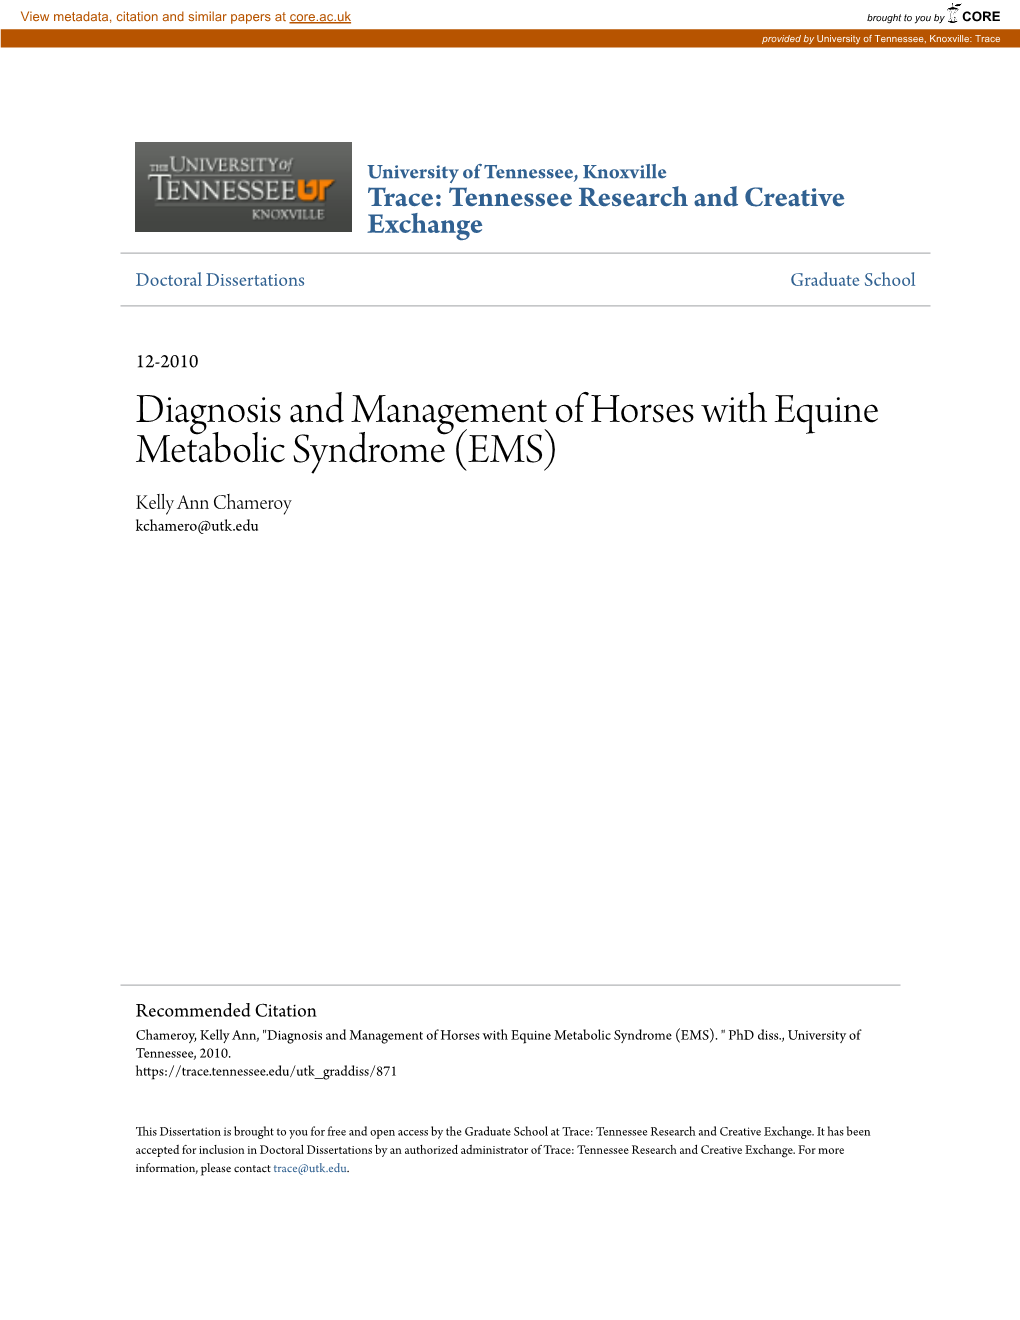 Diagnosis and Management of Horses with Equine Metabolic Syndrome (EMS) Kelly Ann Chameroy Kchamero@Utk.Edu